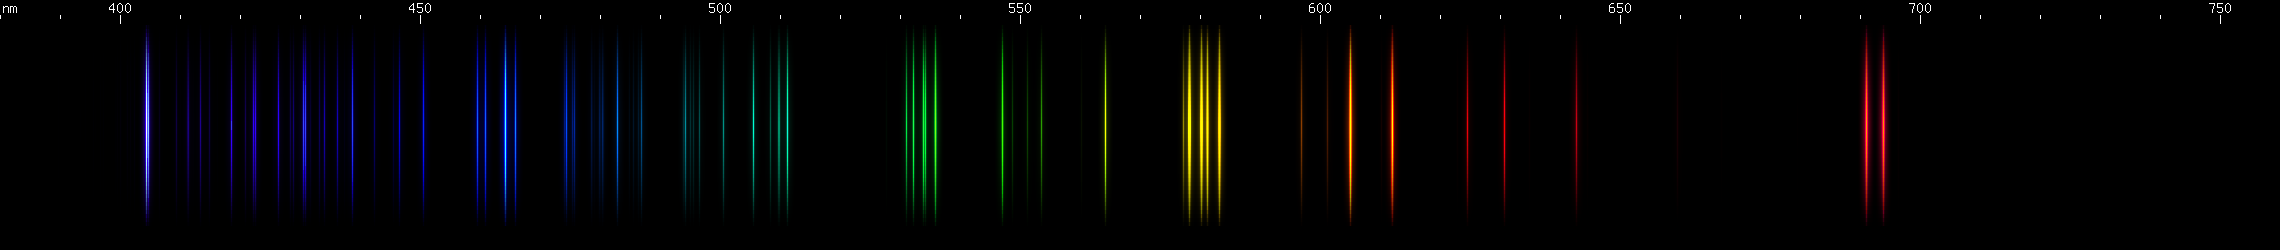 Spectral lines of Potassium.